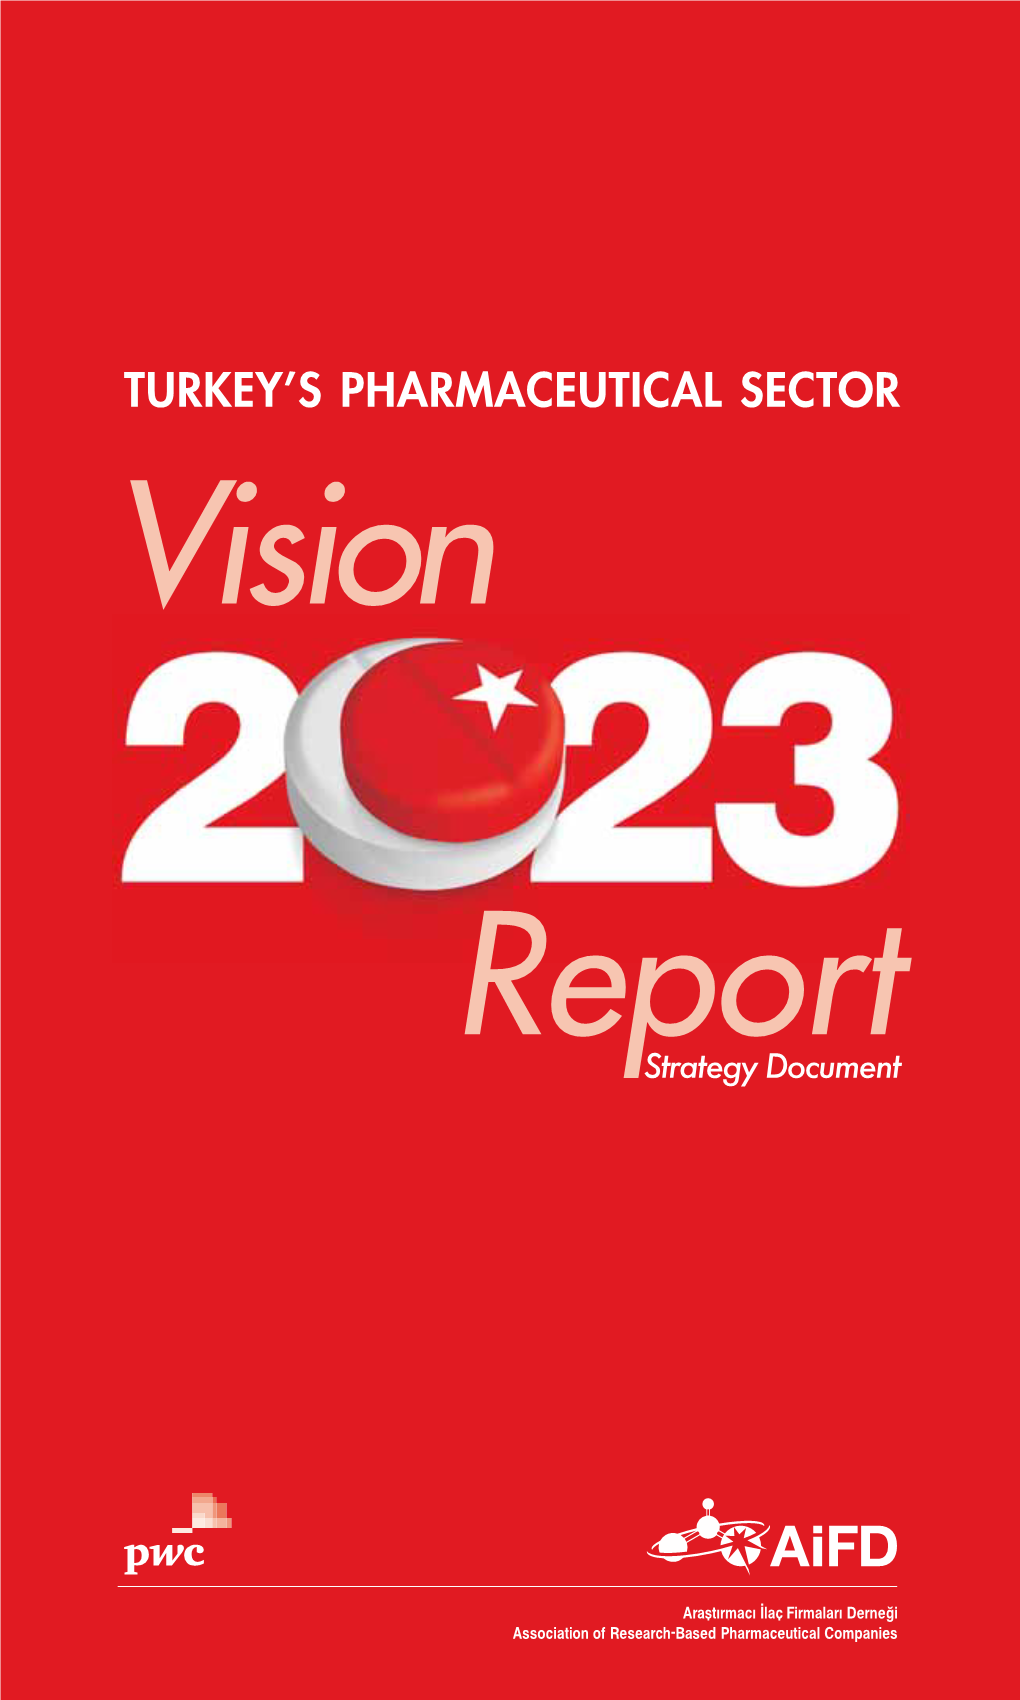 Turkey's Pharmaceutical Sector